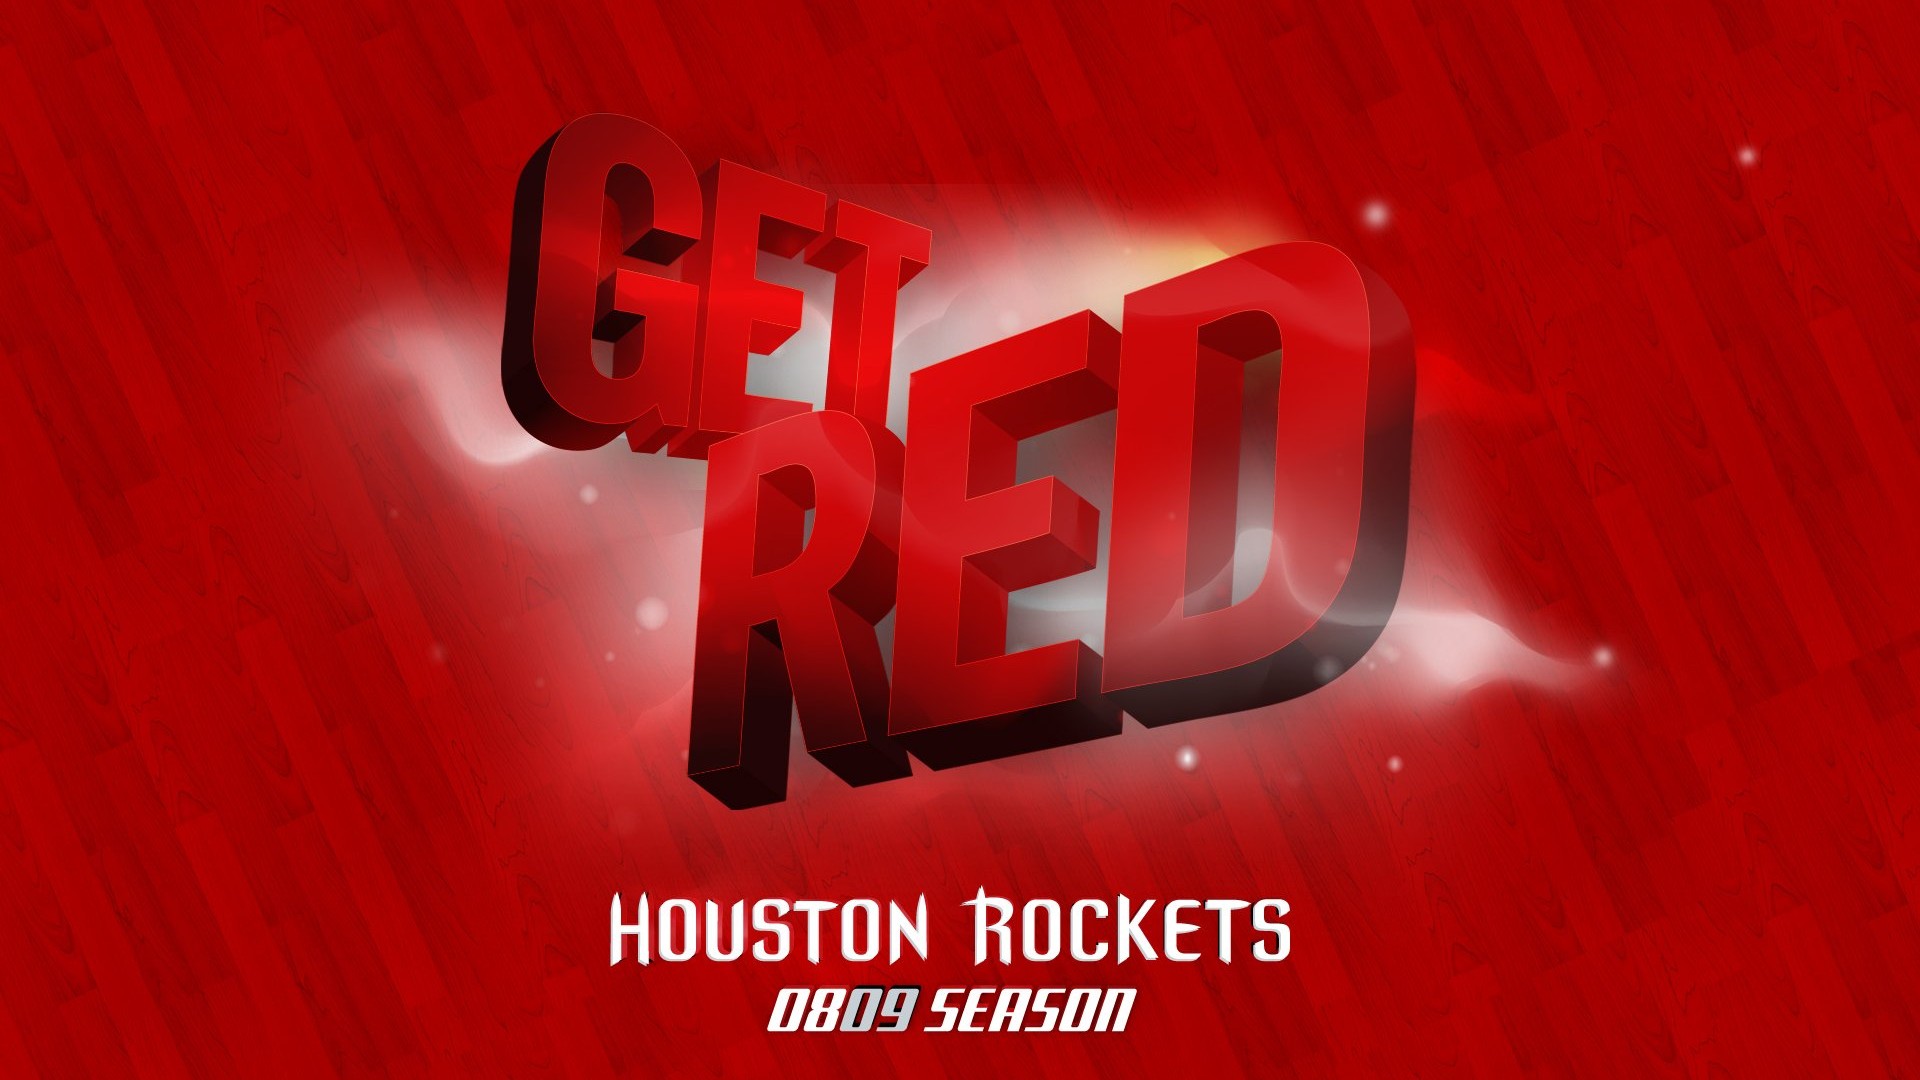 NBA Houston Rockets 2009 playoff wallpaper #5 - 1920x1080